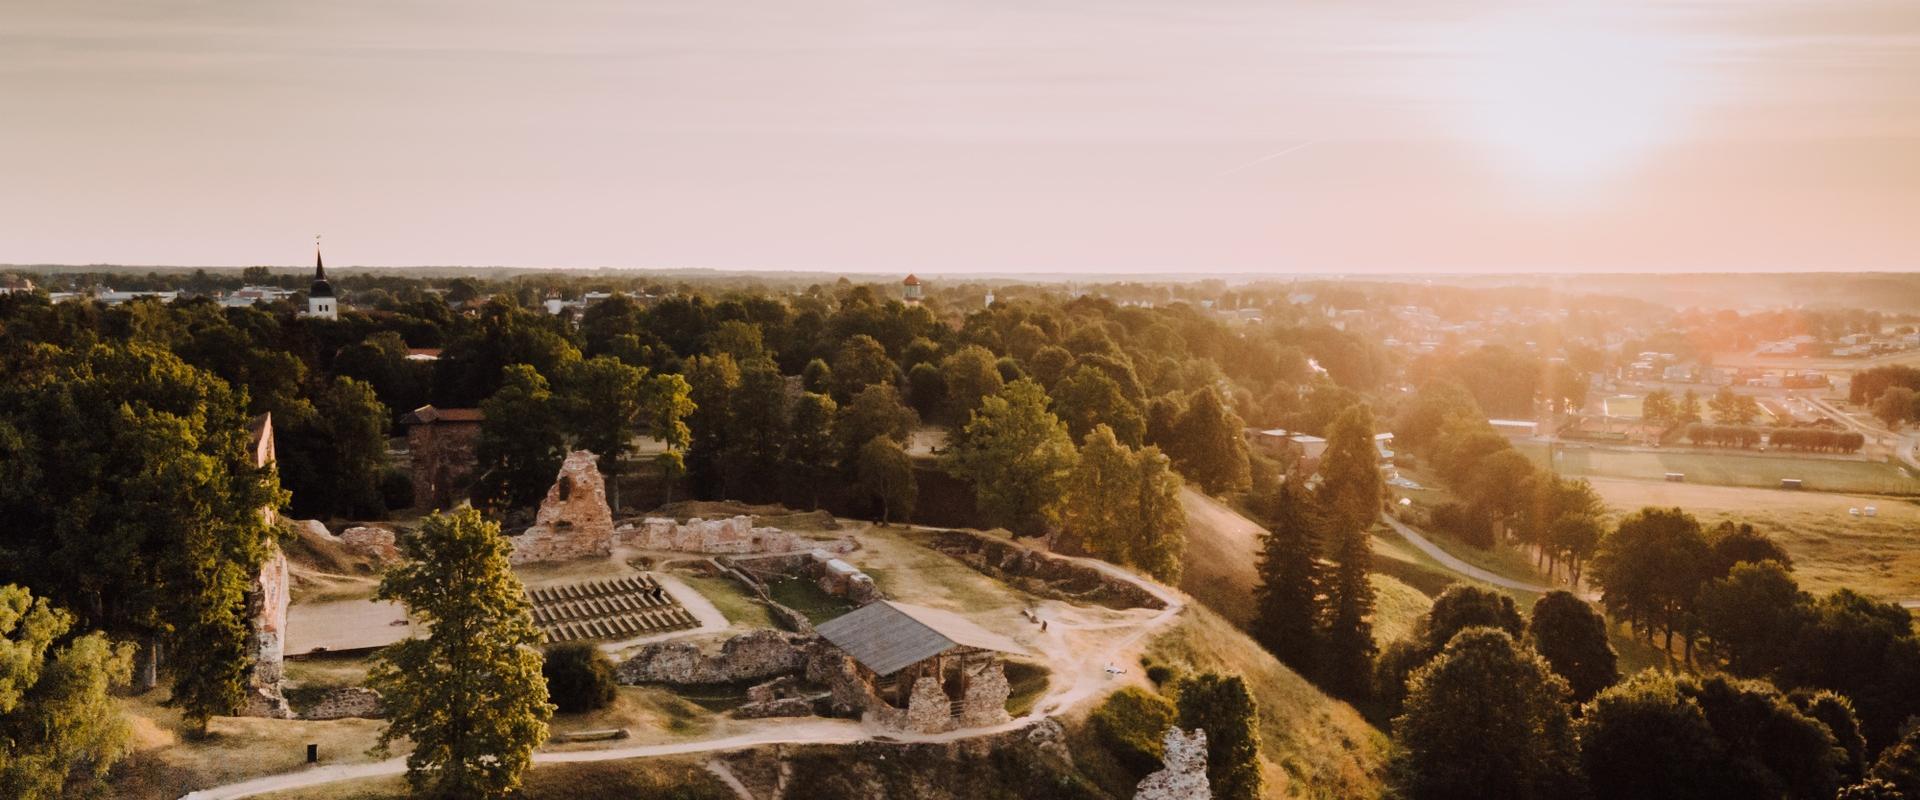 Viljandi castle park